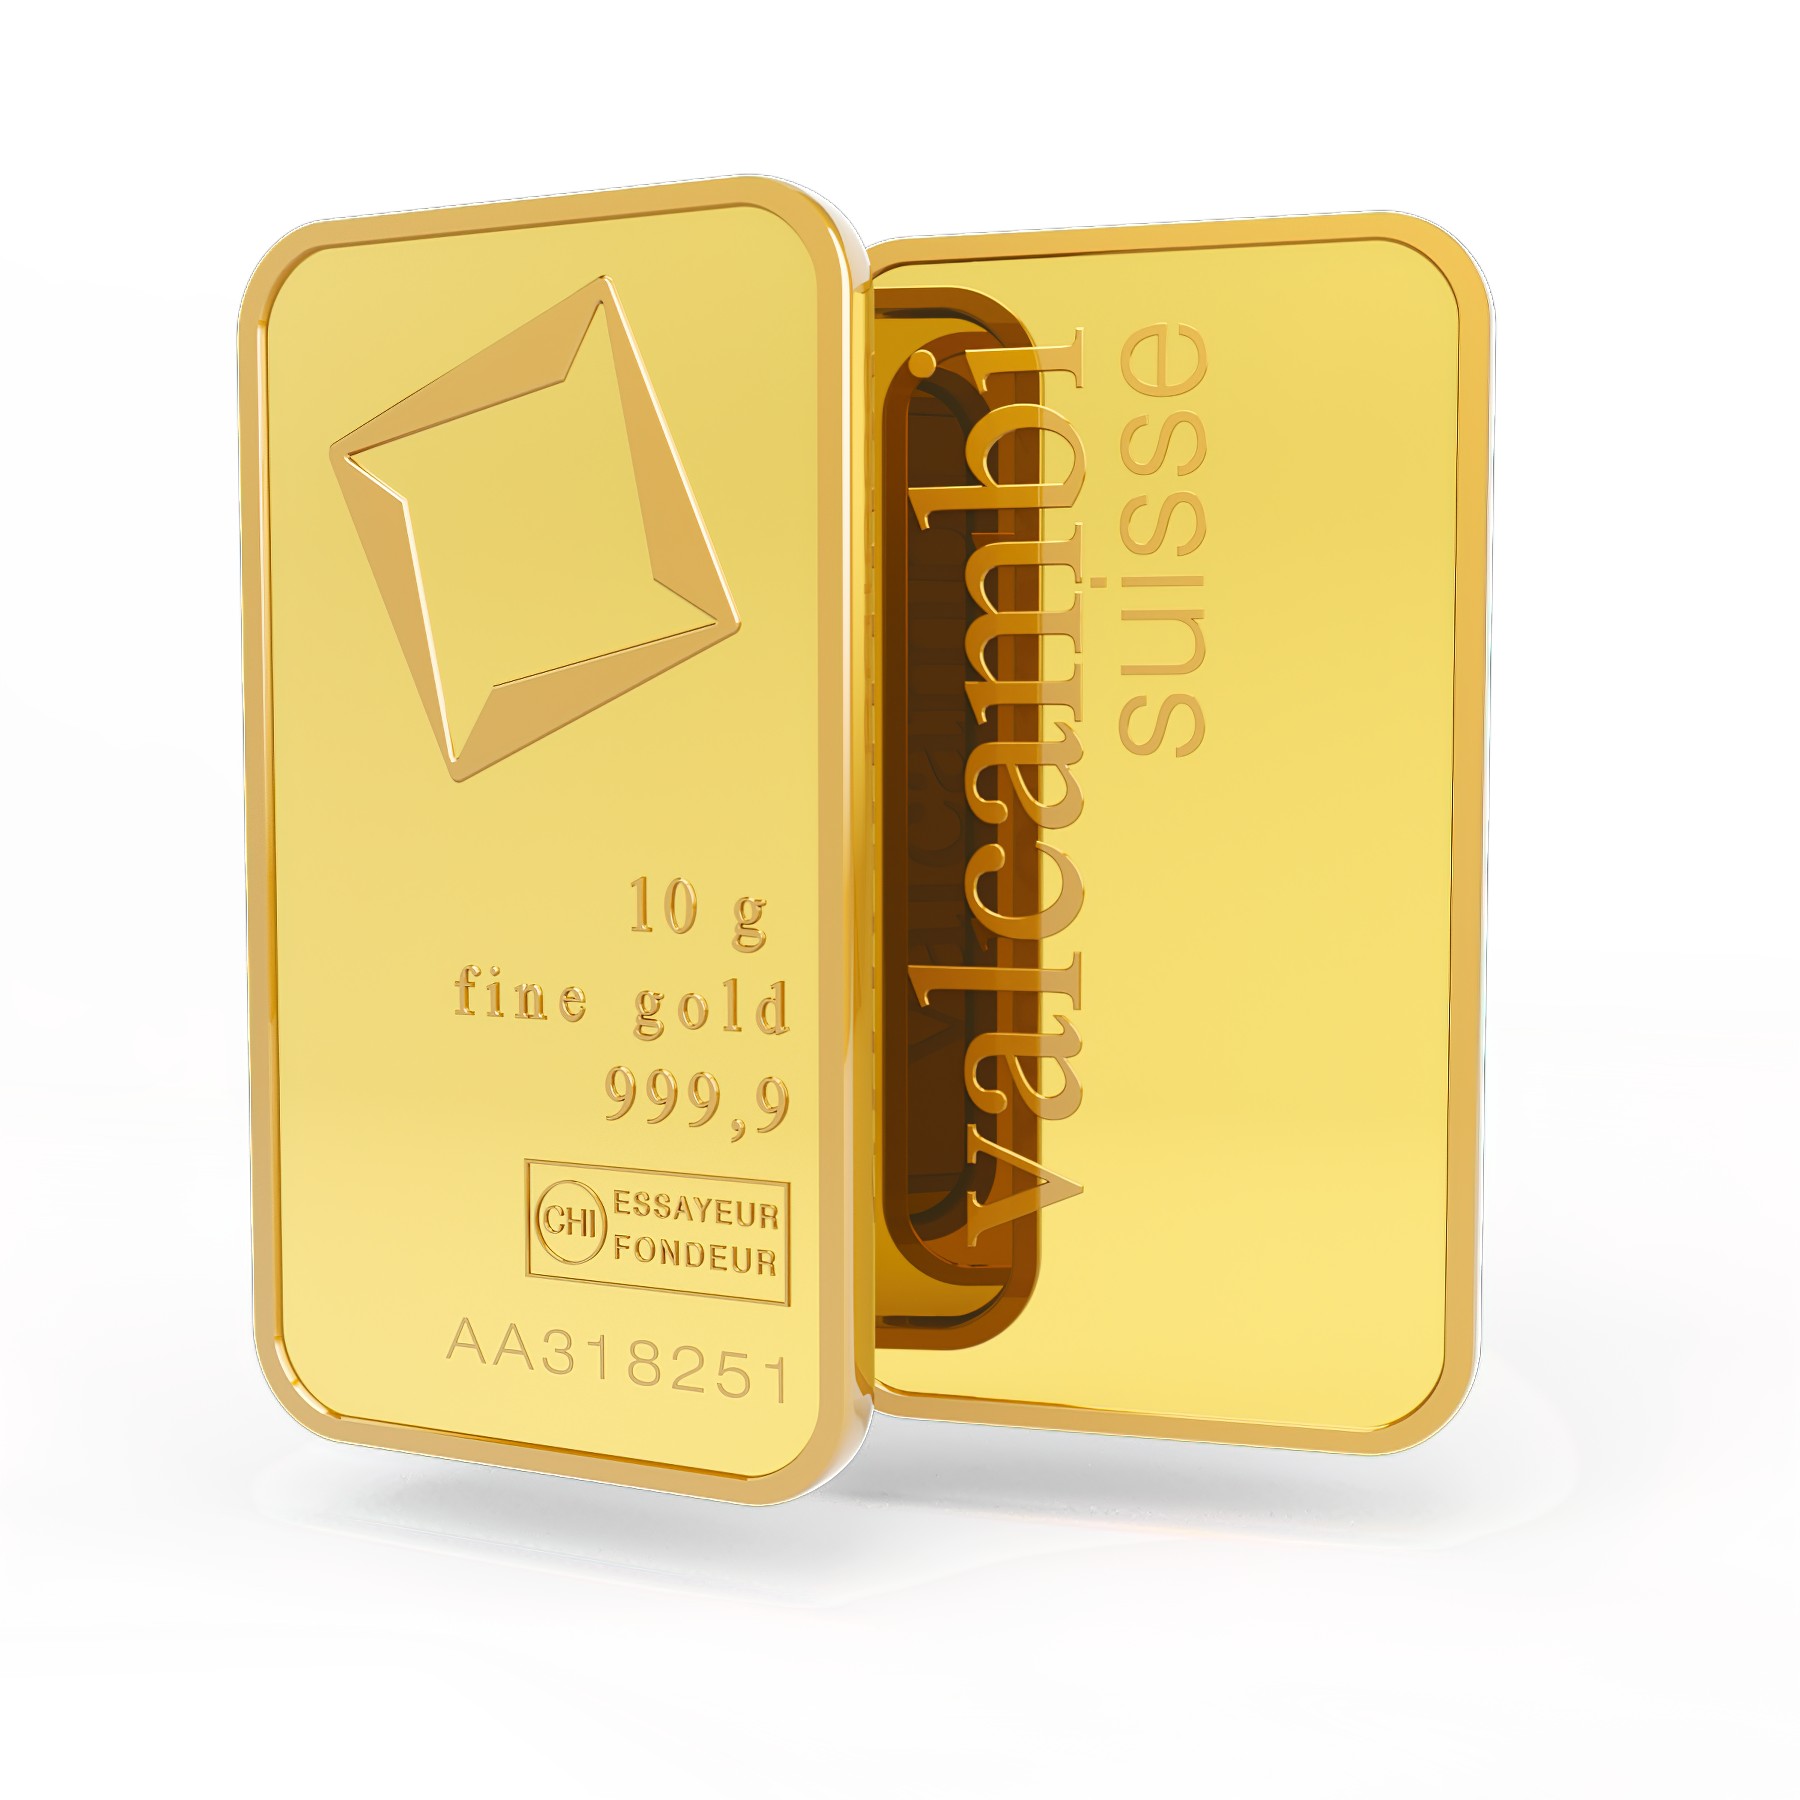 Aranyrúd 10gr, Svájc, Fine Gold 999,9